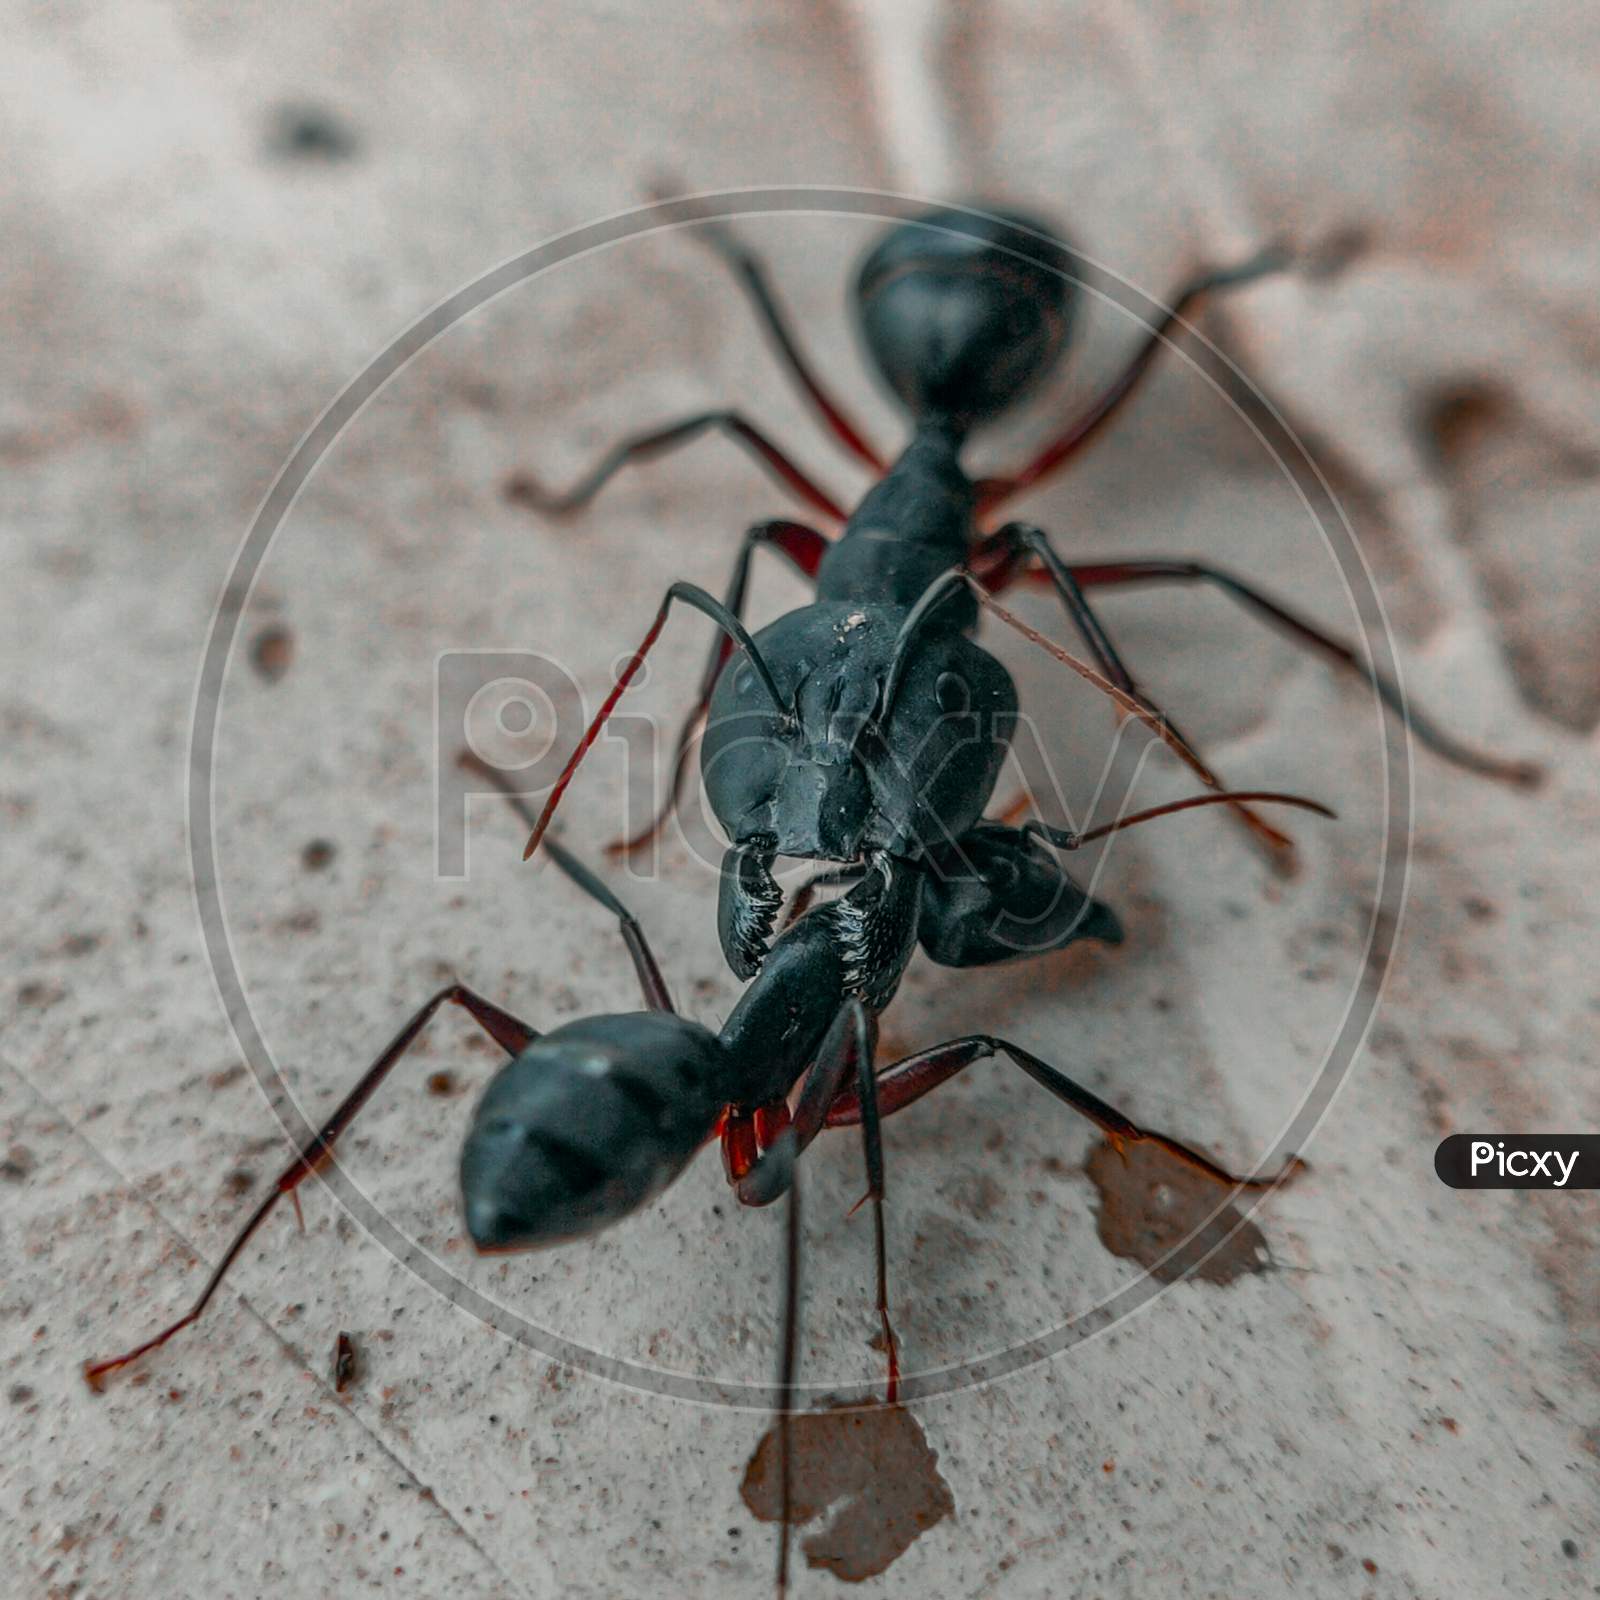 Ants fighting in macro